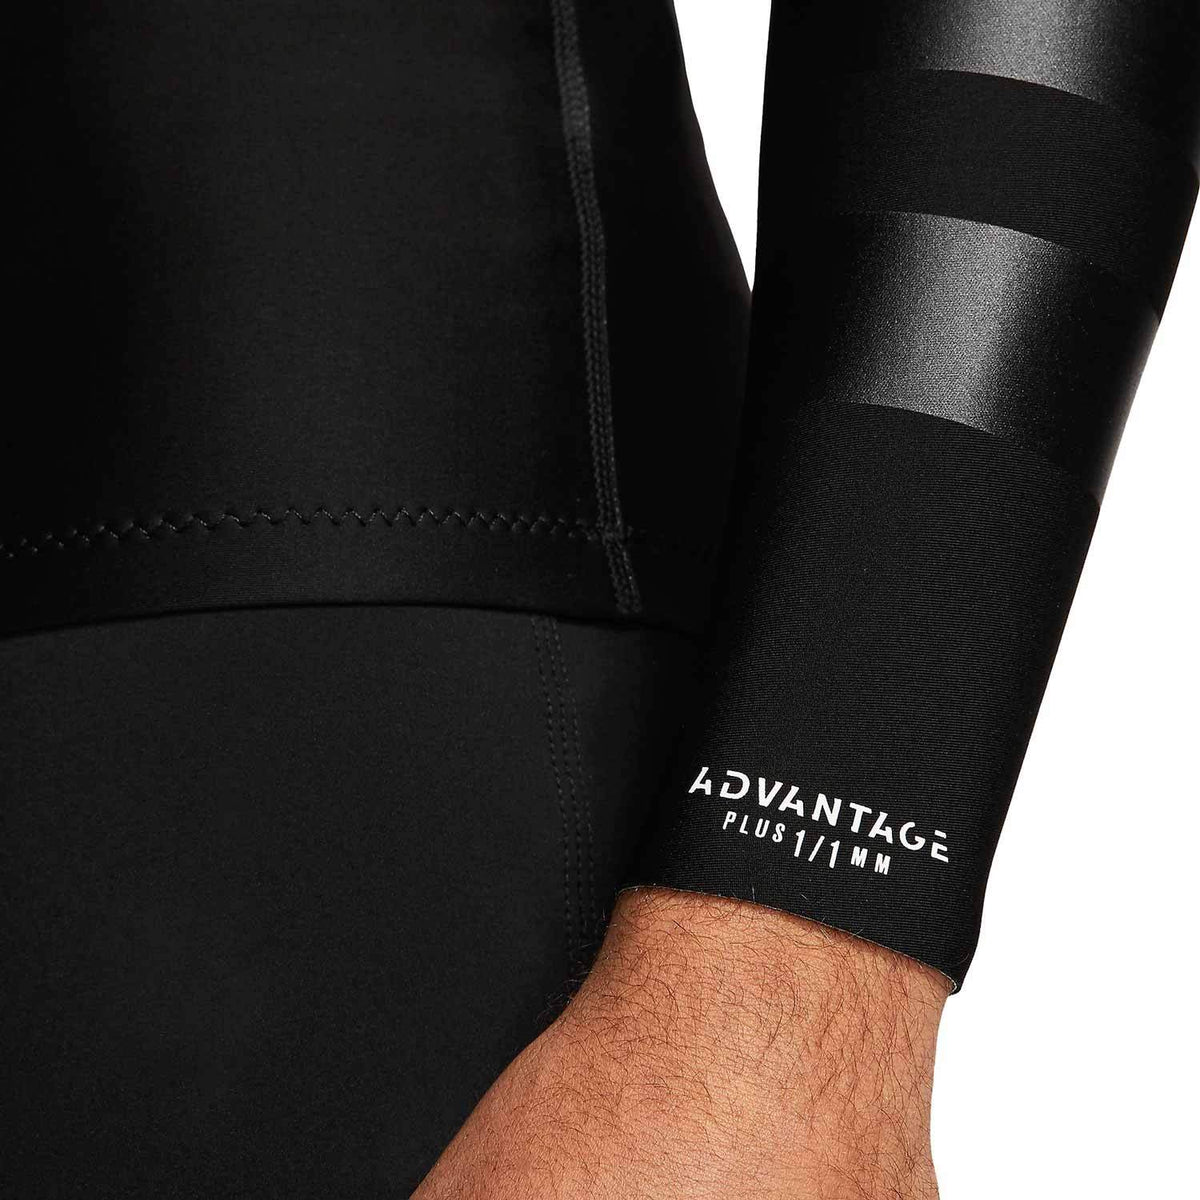 Hurley Advantage Plus 1mm Reversible Wetsuit Jacket Top - Black